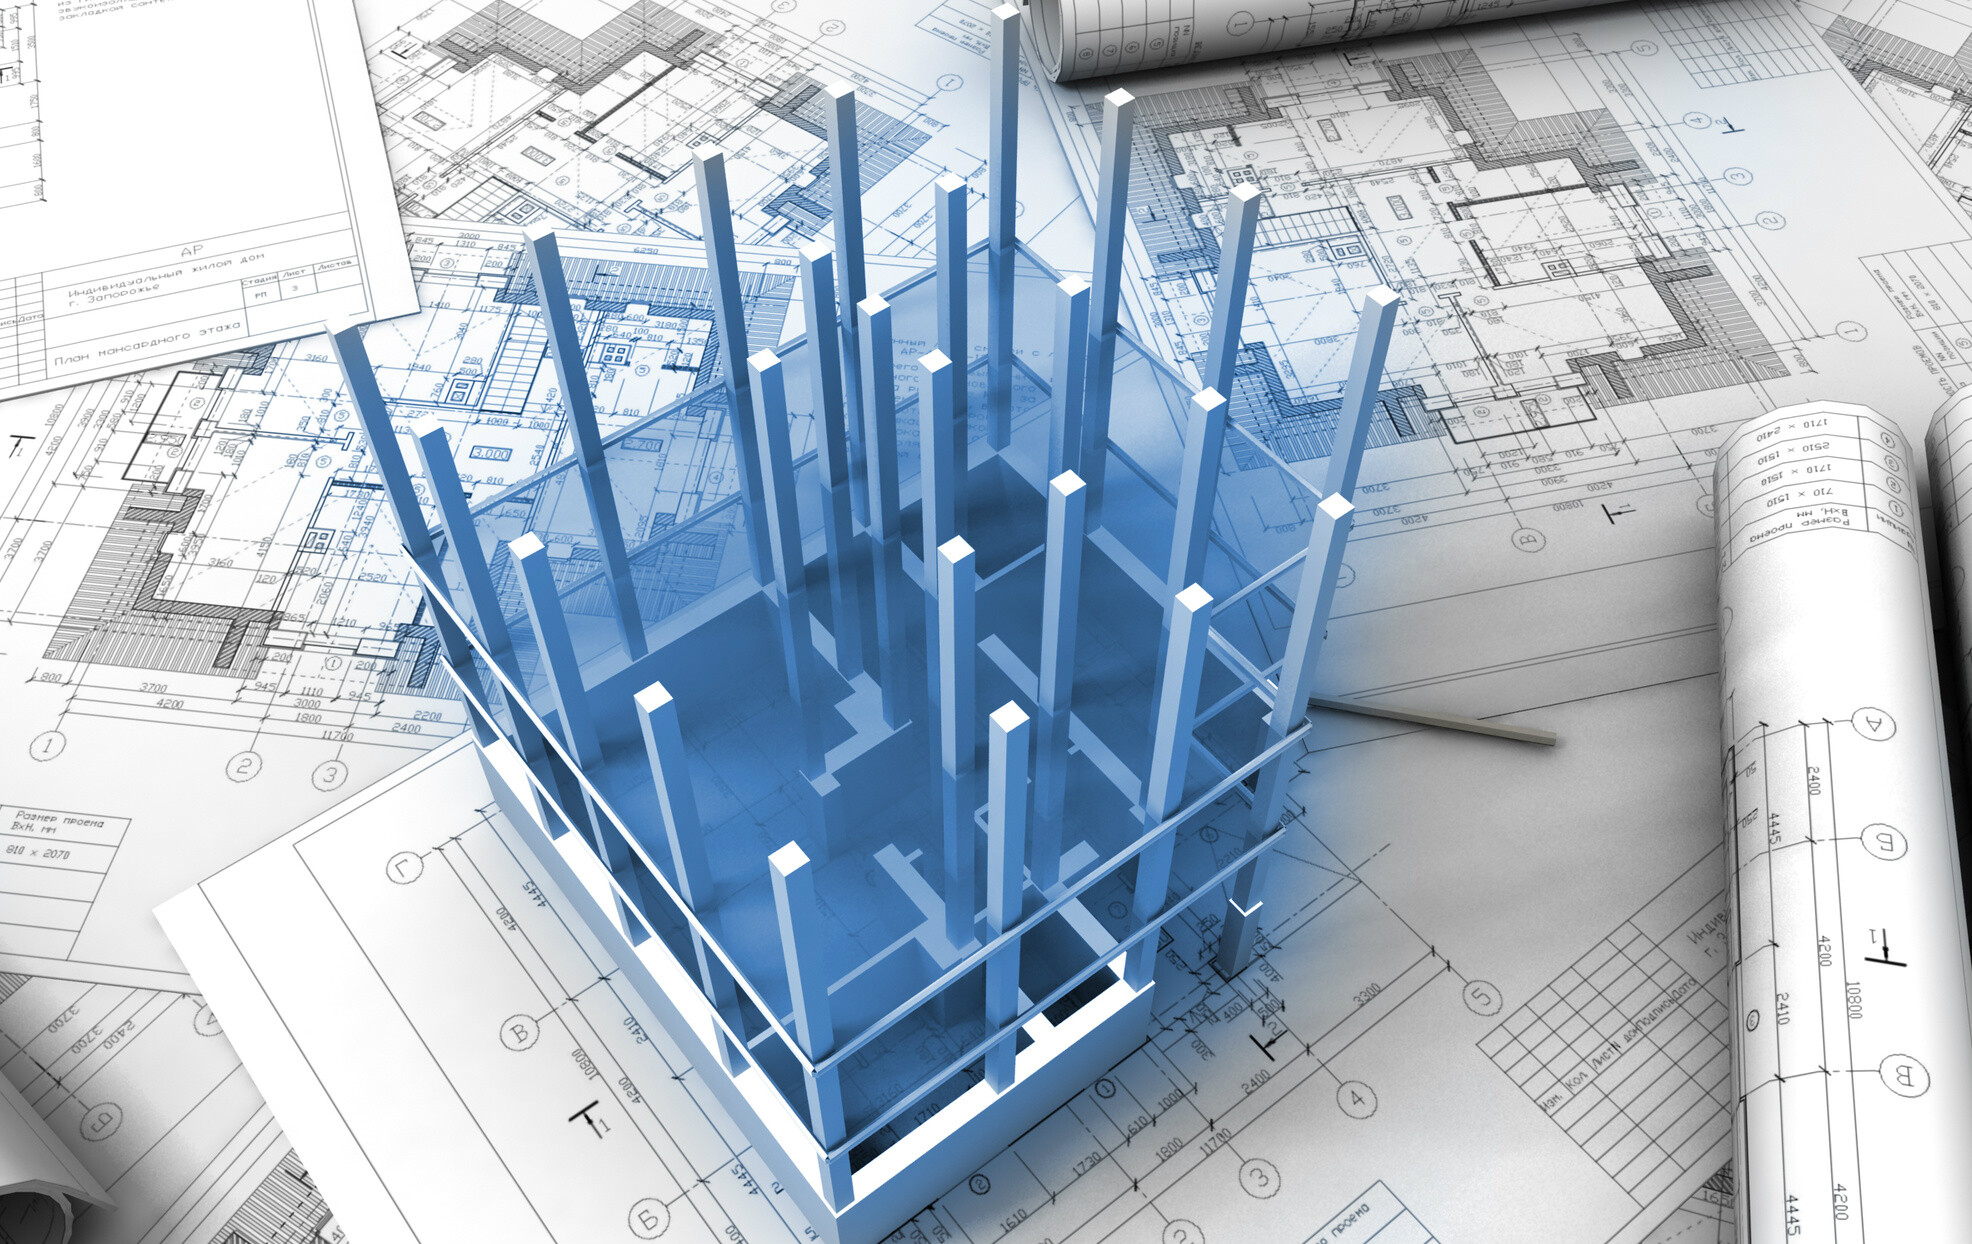 More information about "BIM, μελέτη εφαρμογής και “ως κατασκευάσθει”, σε νέα κτίρια και υπάρχοντα κτίρια"